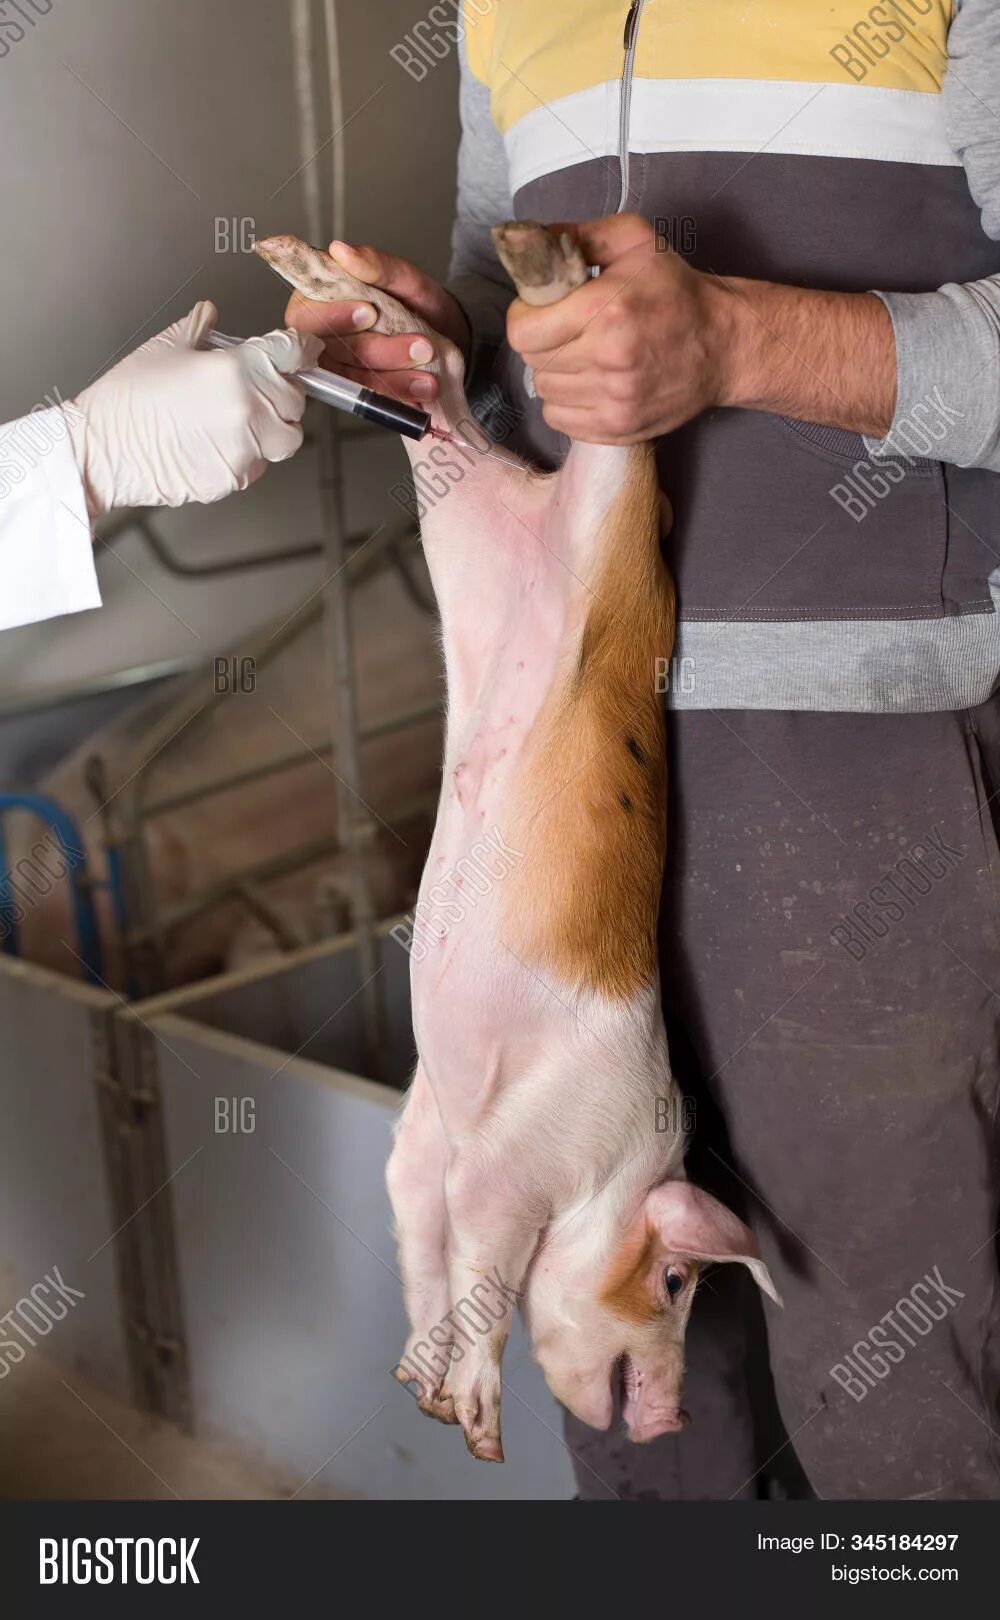 Инъекции свинье. Вакцинация свиней на производстве.